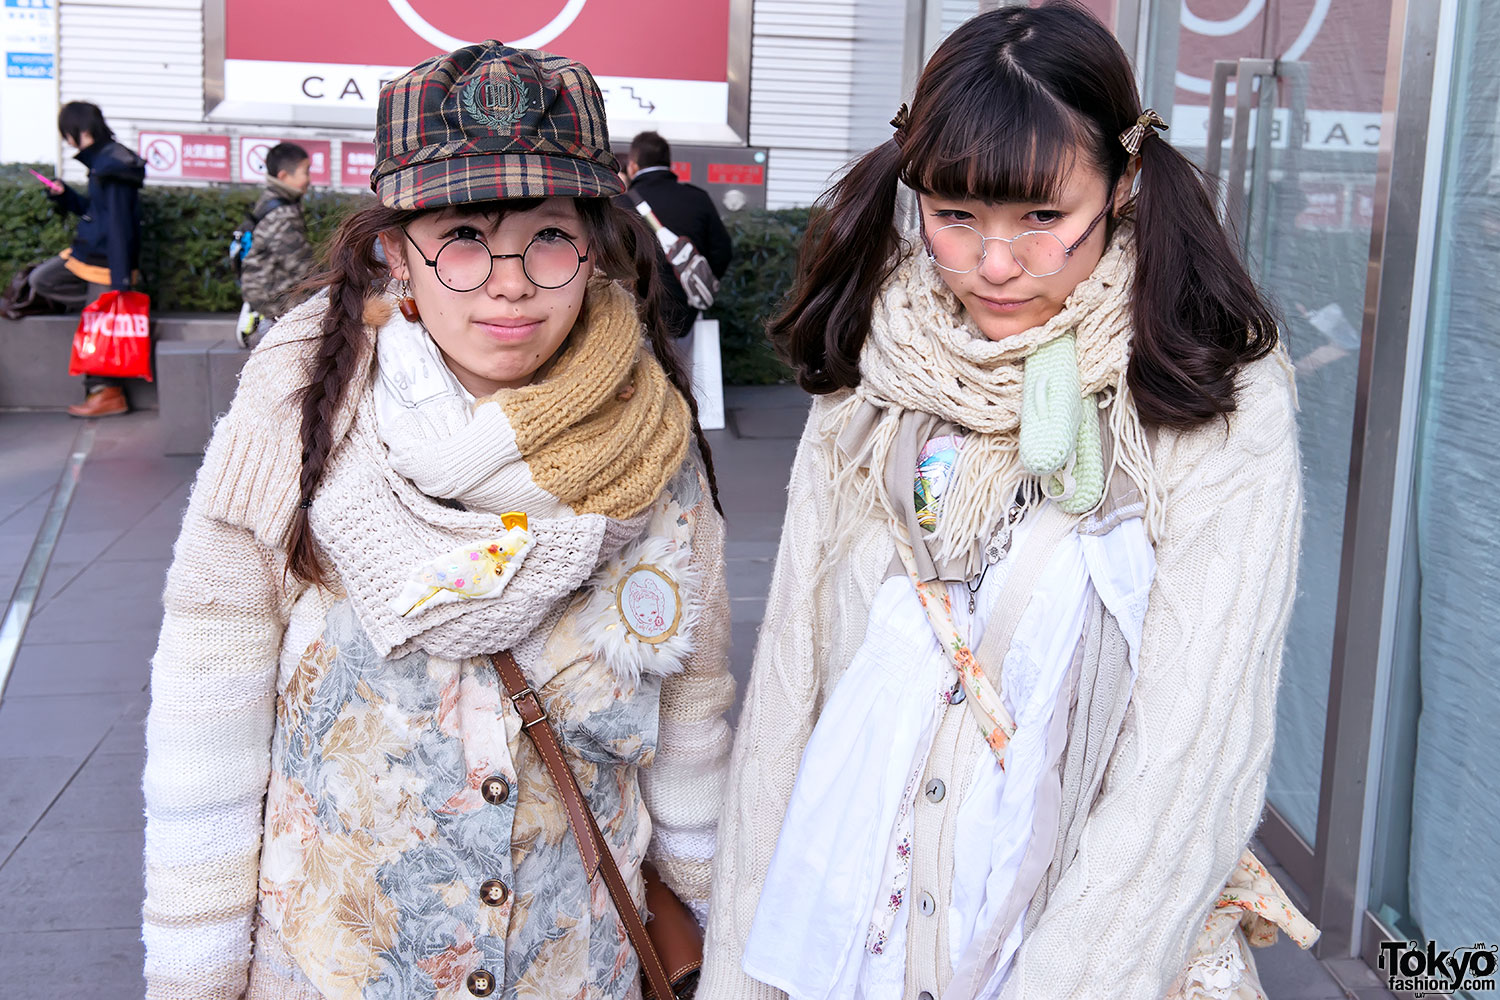 Cute Earrings & Round Glasses – Tokyo Fashion